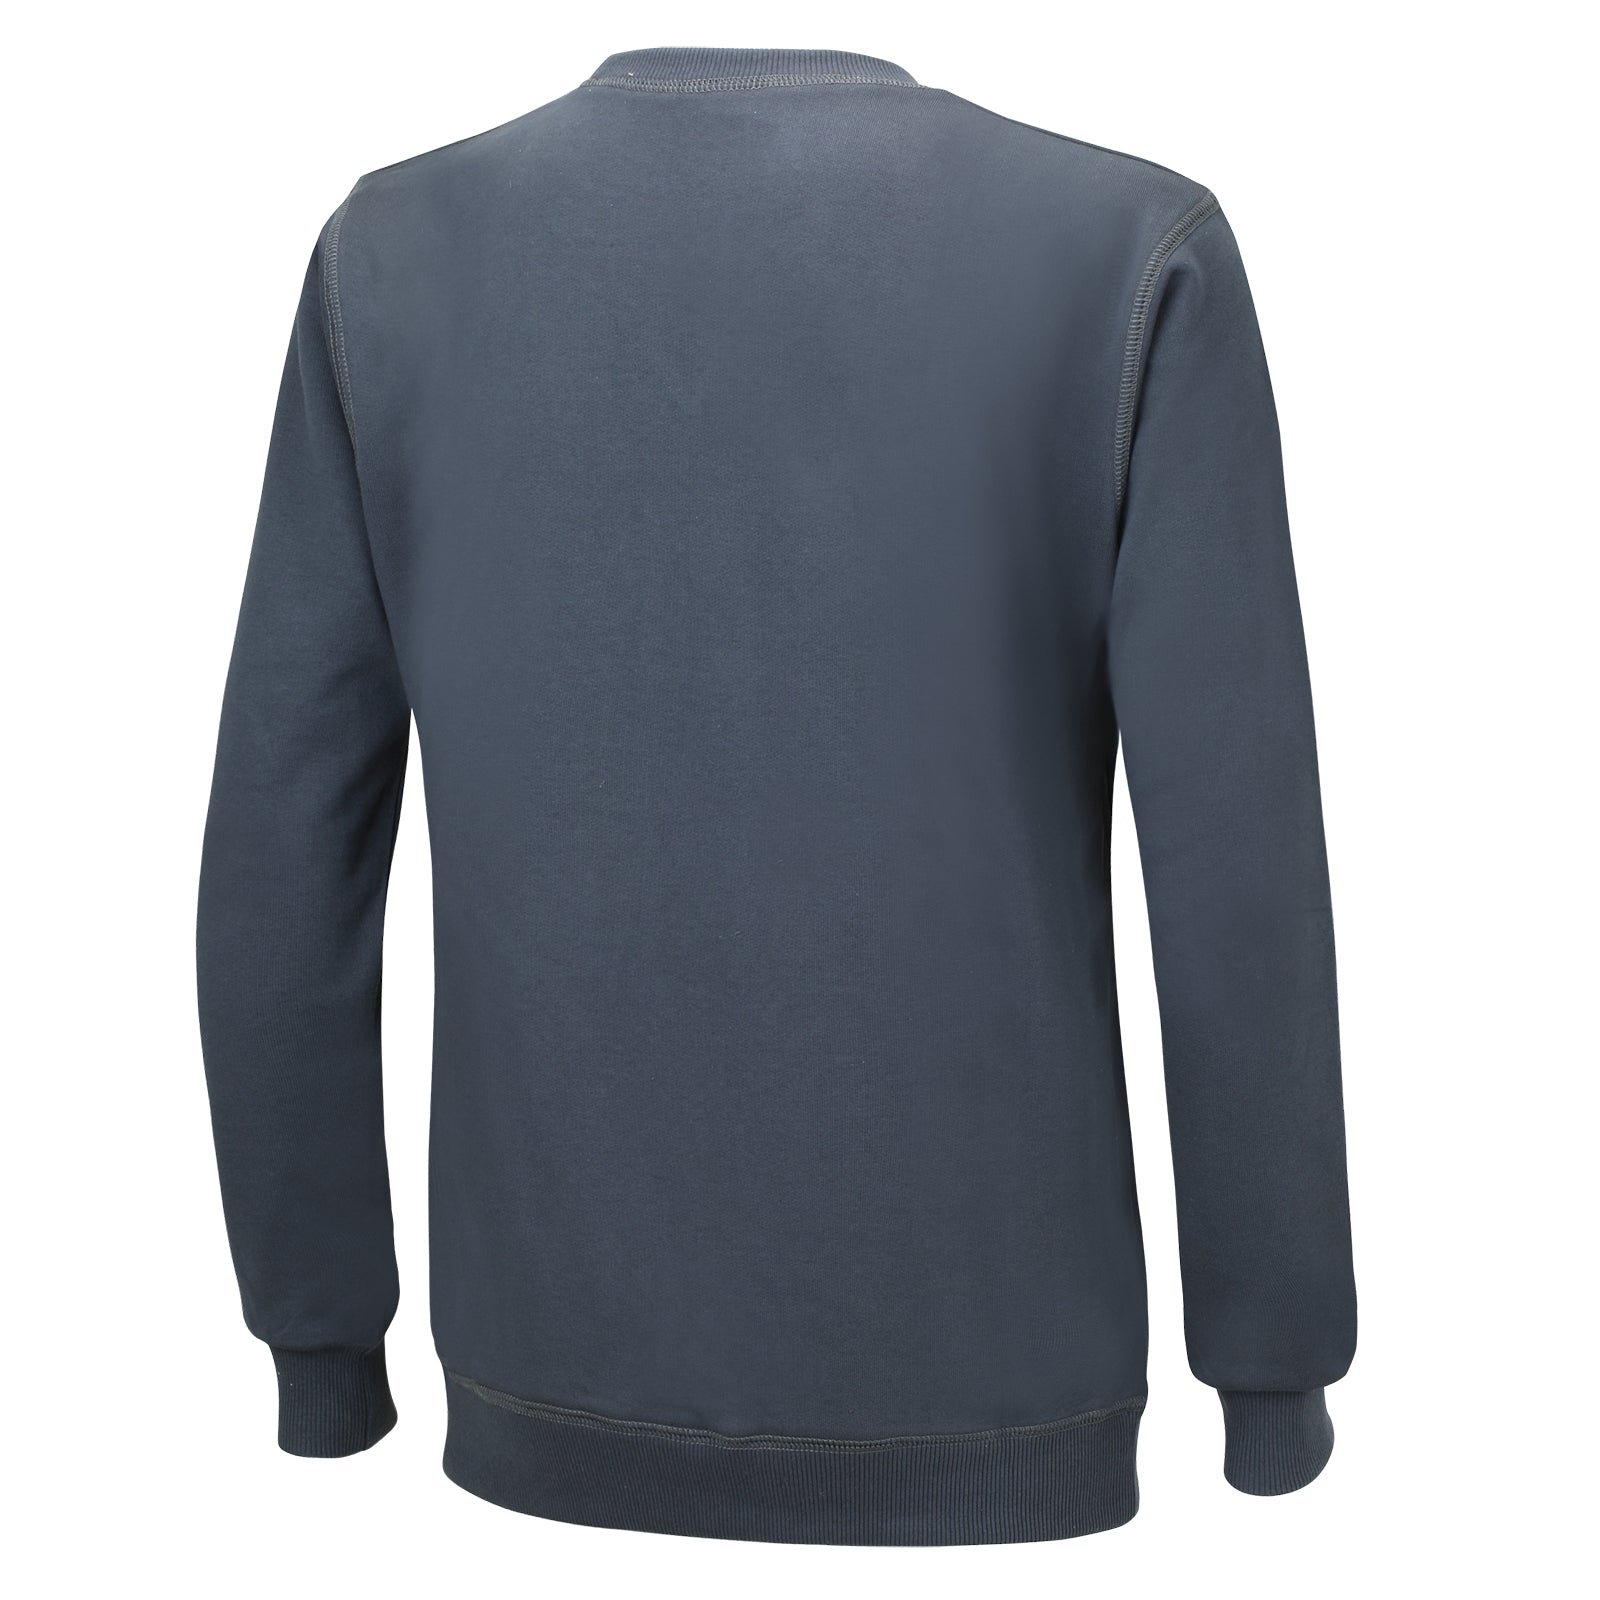 Sweatshirt-ohne-kapuze-winter-thermo-pro-hoodie-sweater-s-m-l-xl-xxl-grau-schwarz-logo-print-back